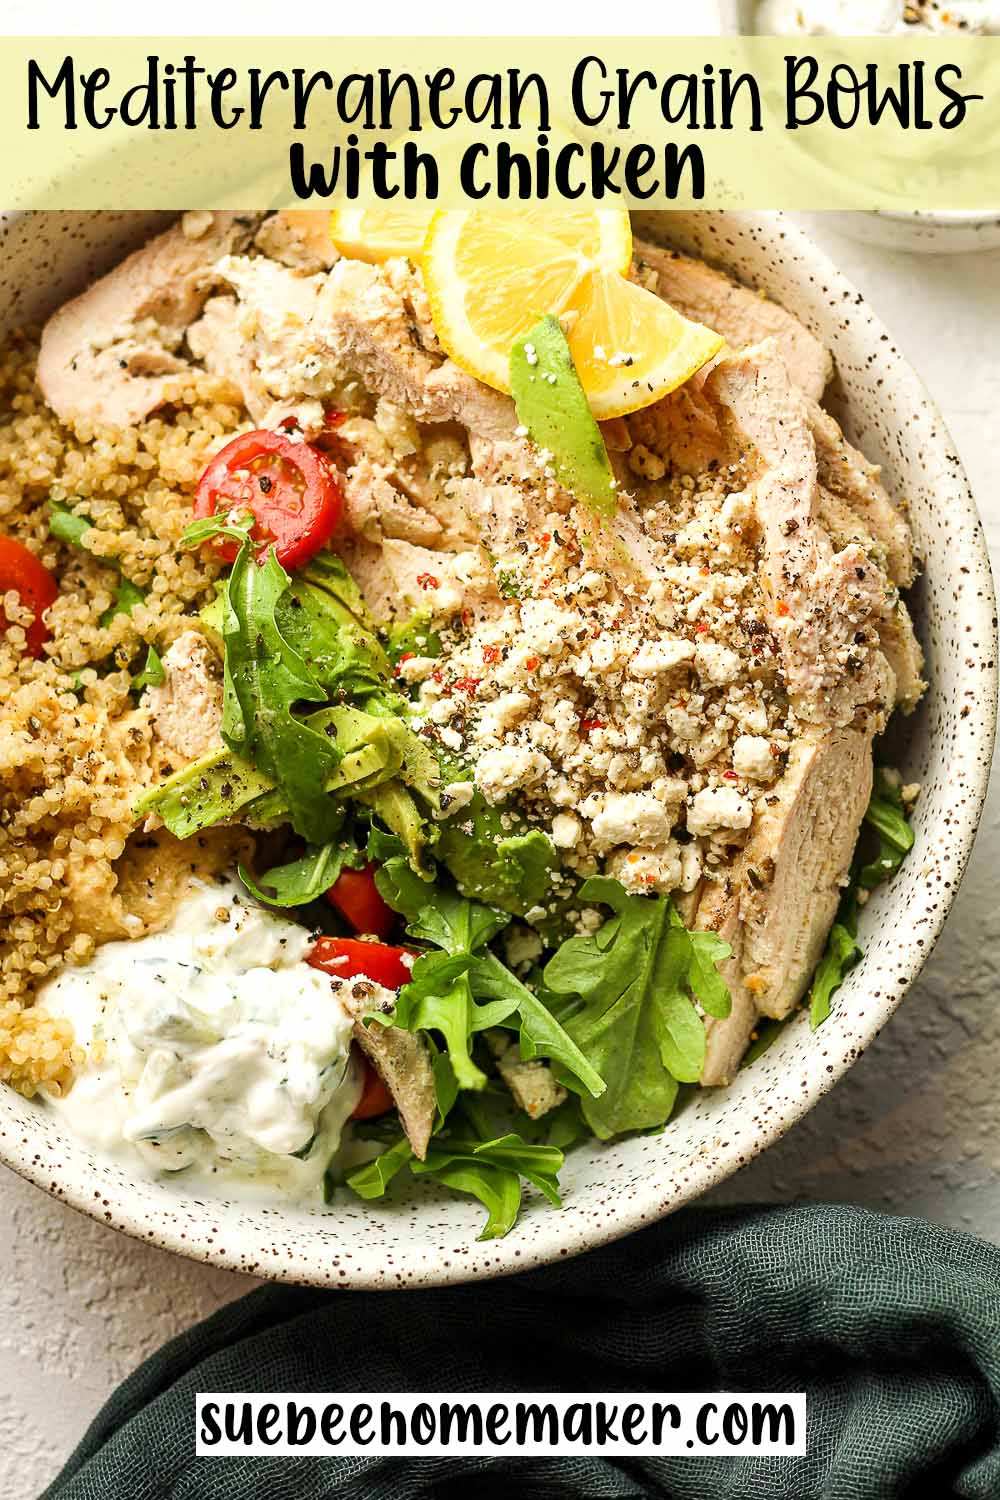 Closeup on a Mediterranean Grain Bowl with Chicken.